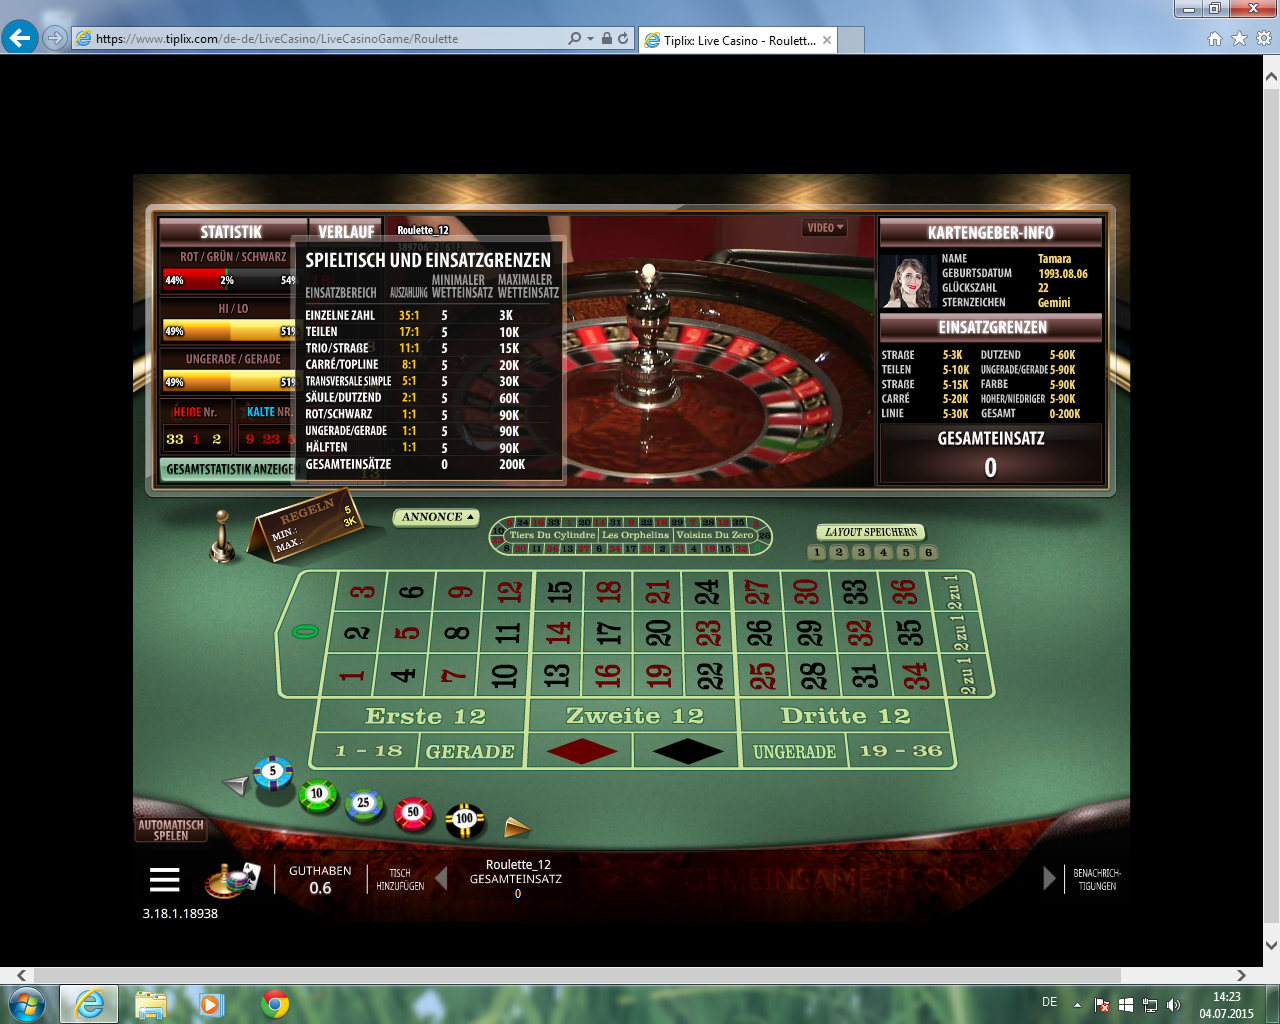 BetVictor Live Casino Test